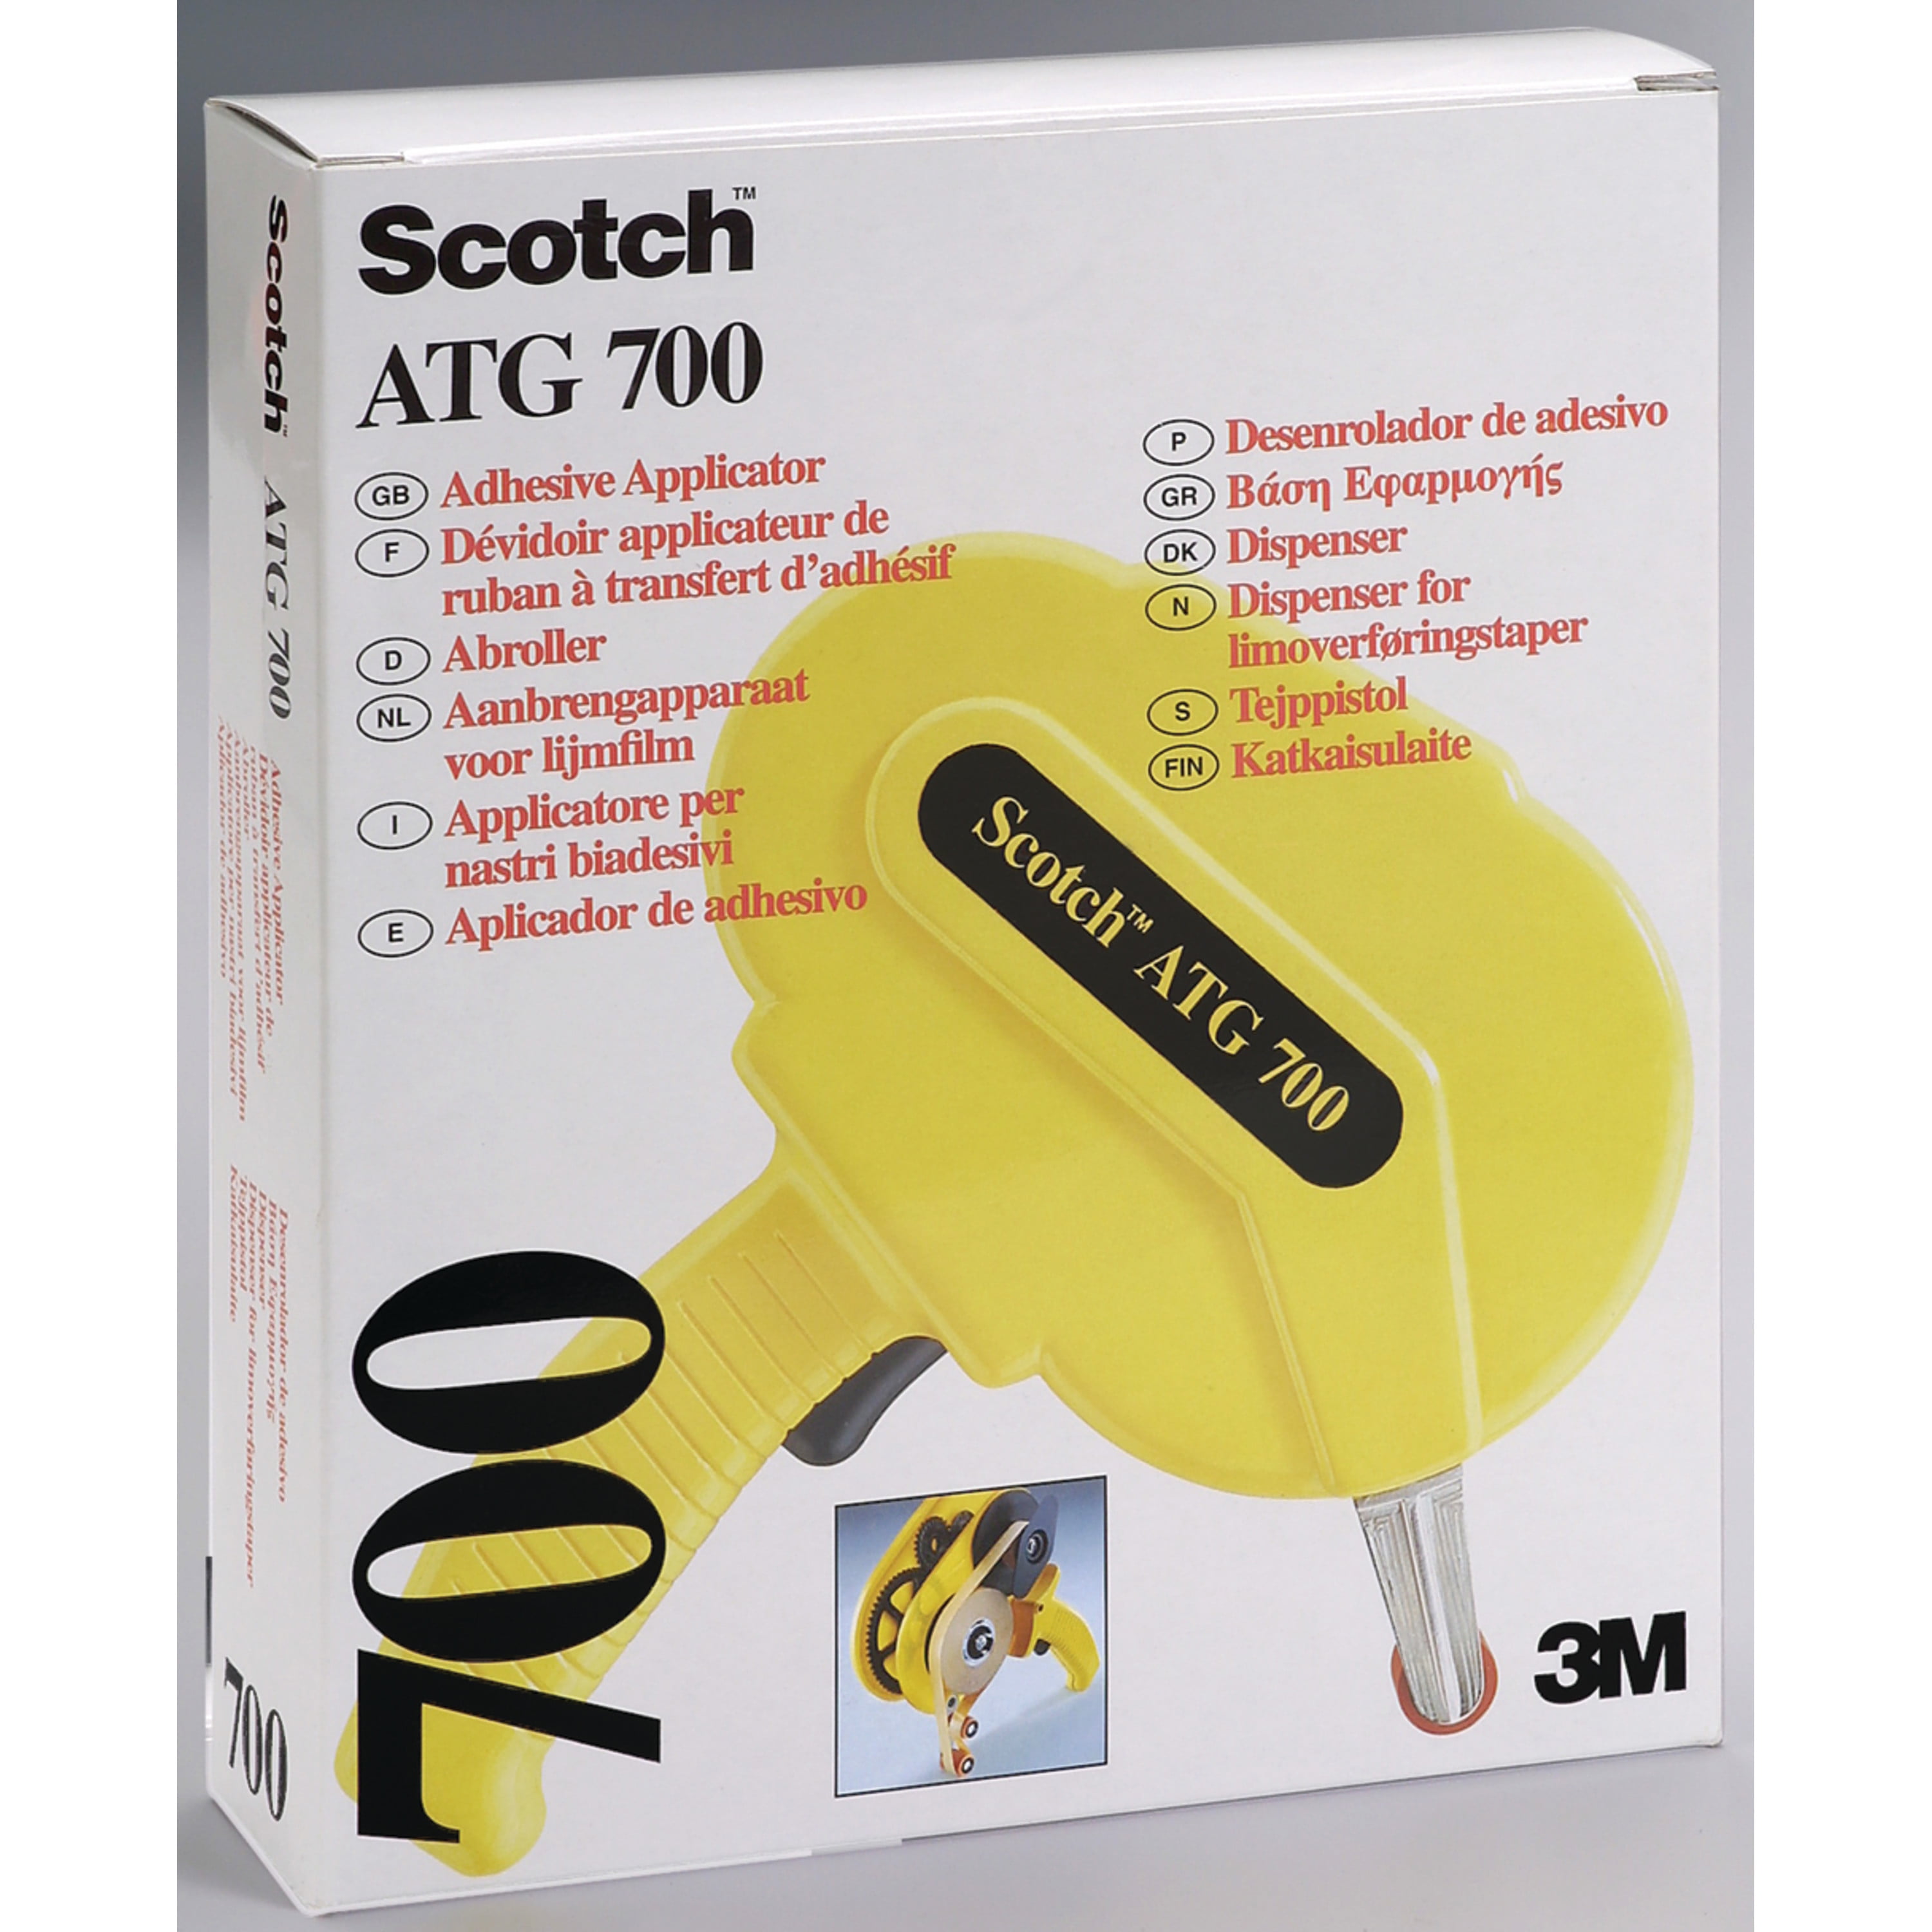 Scotch ATG700 Dispenser per nastro biadesivo